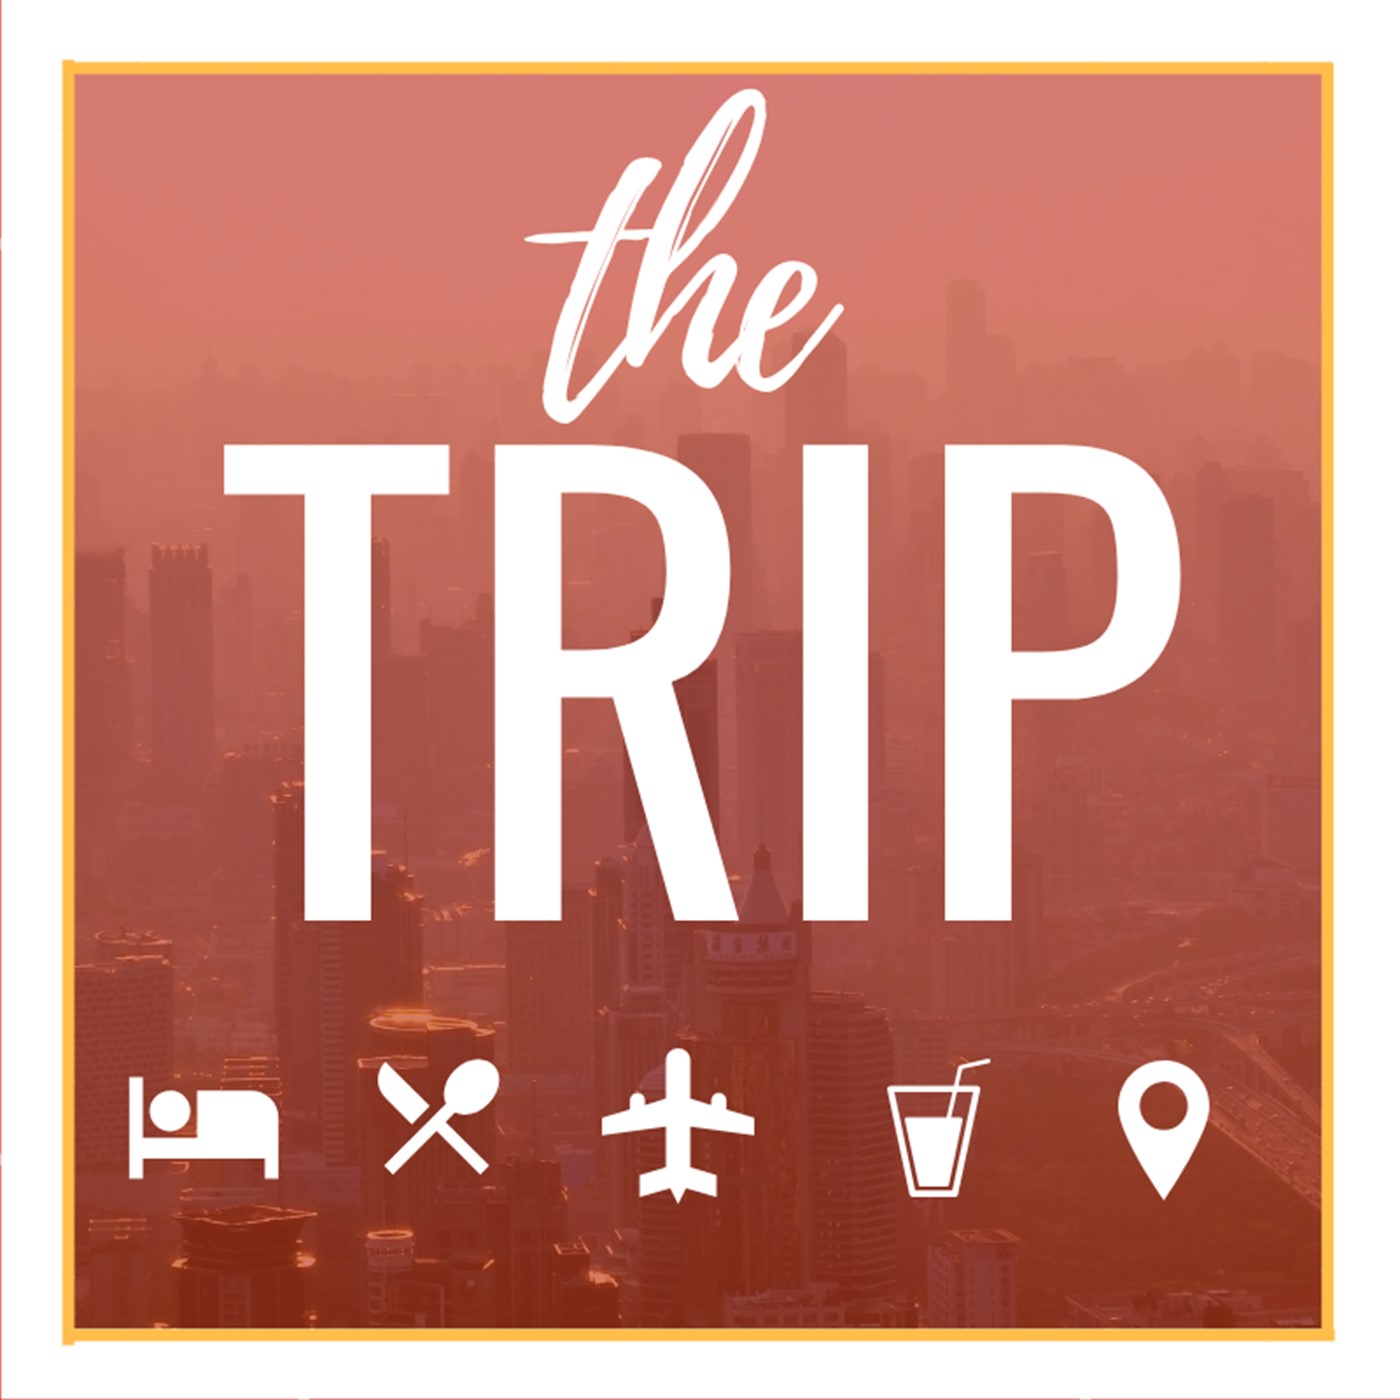 Cappadocia Travel Guide: With @Anniesbucketlist